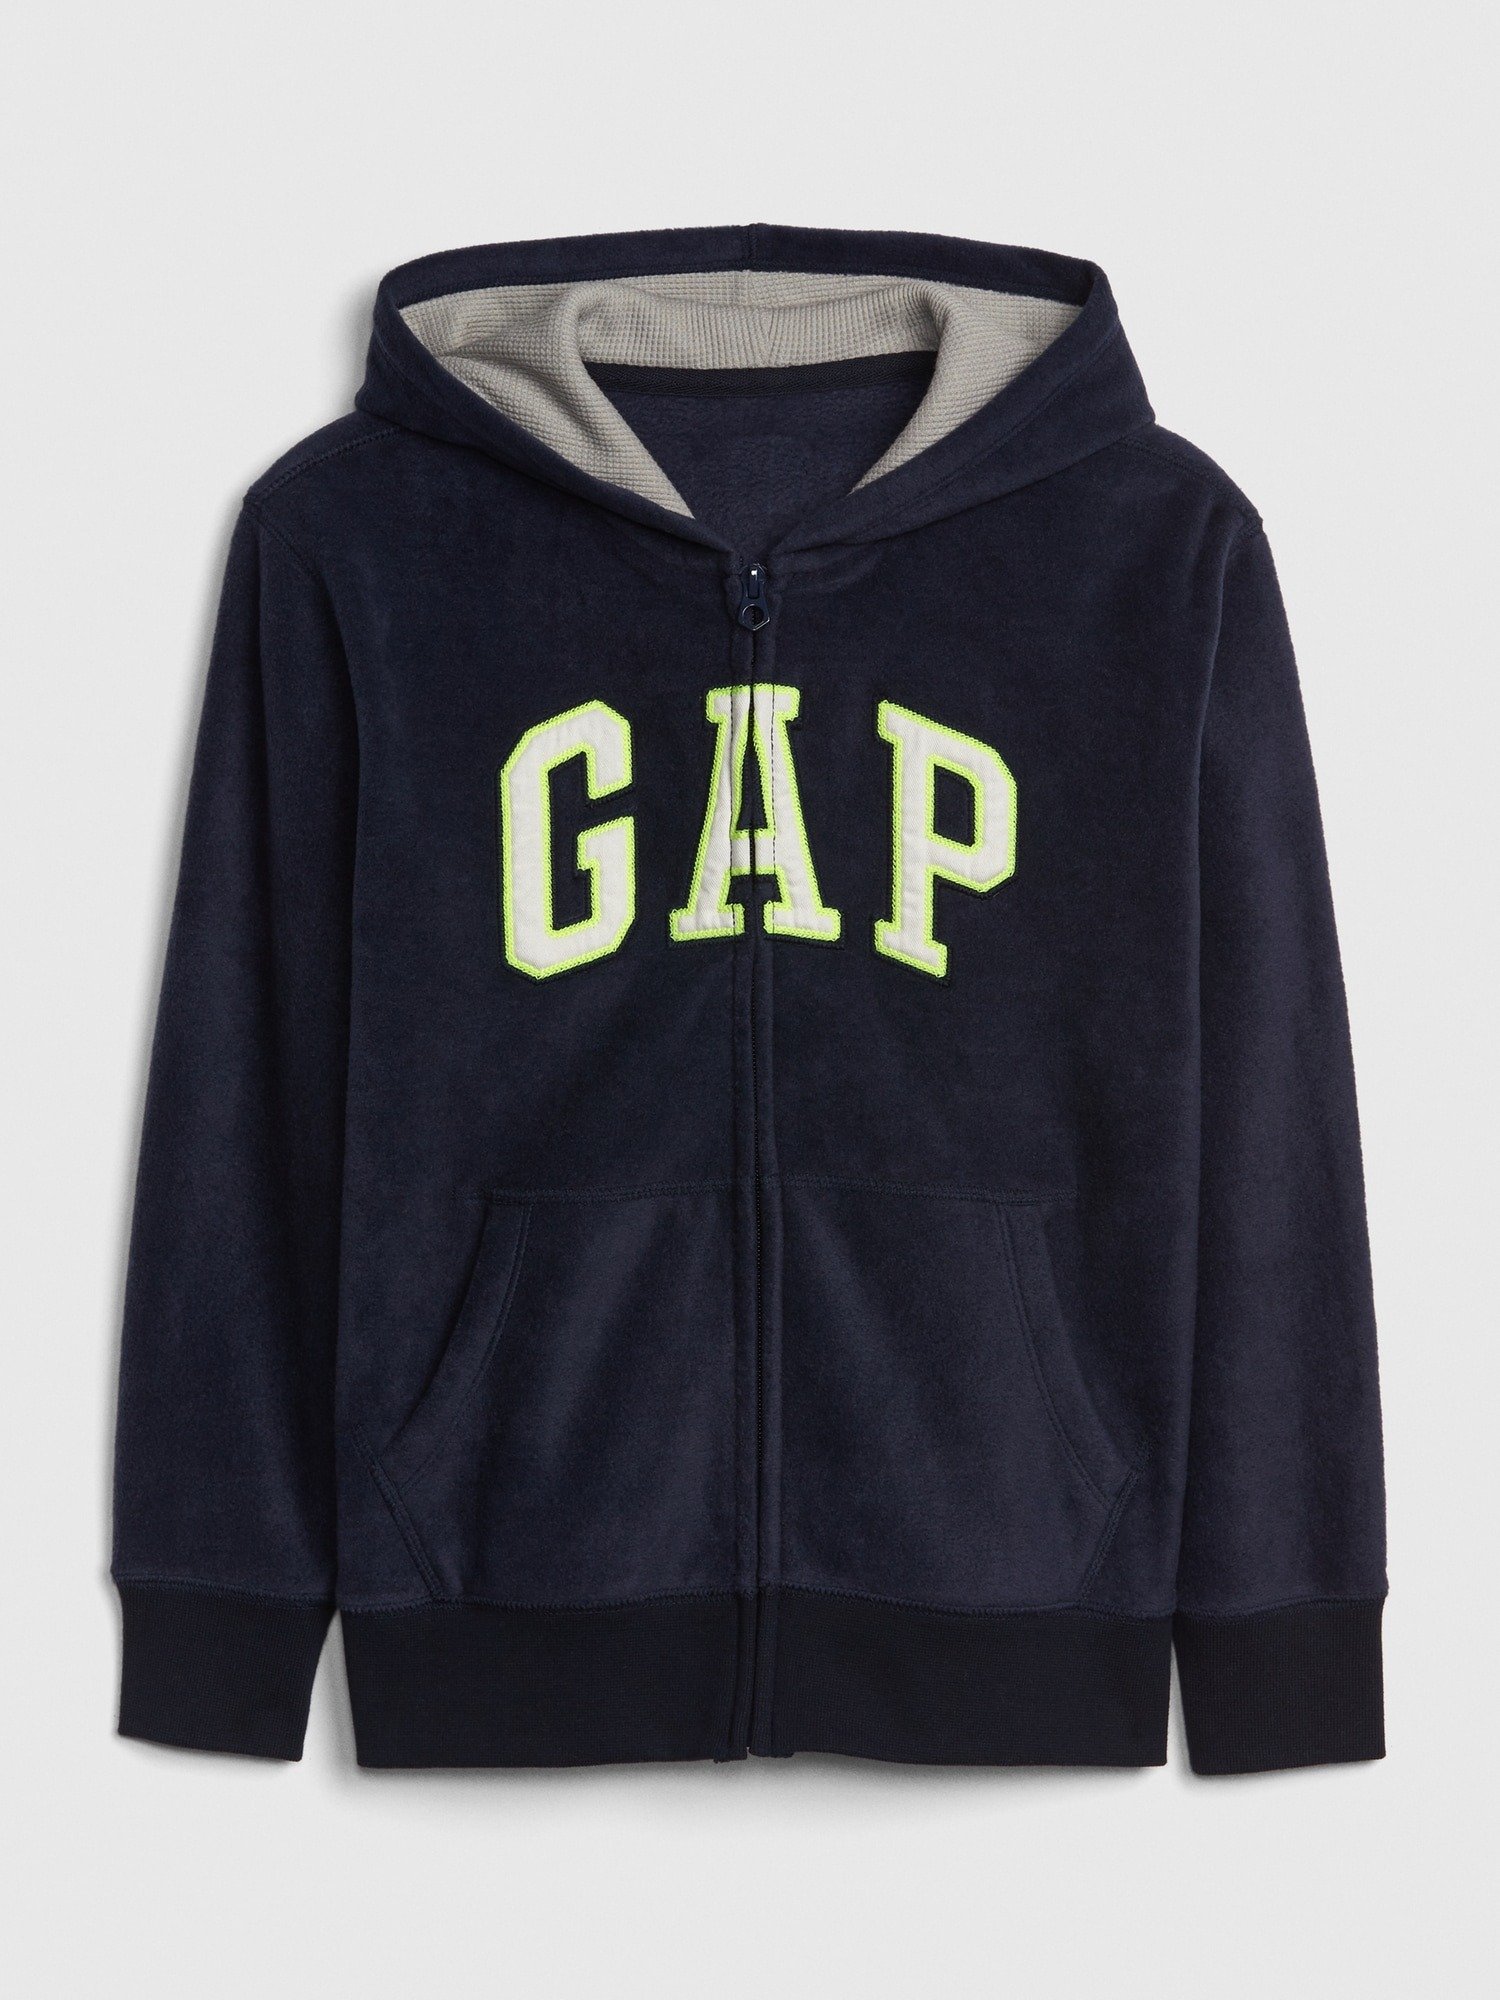 Gap Logo  Sweatshirt product image